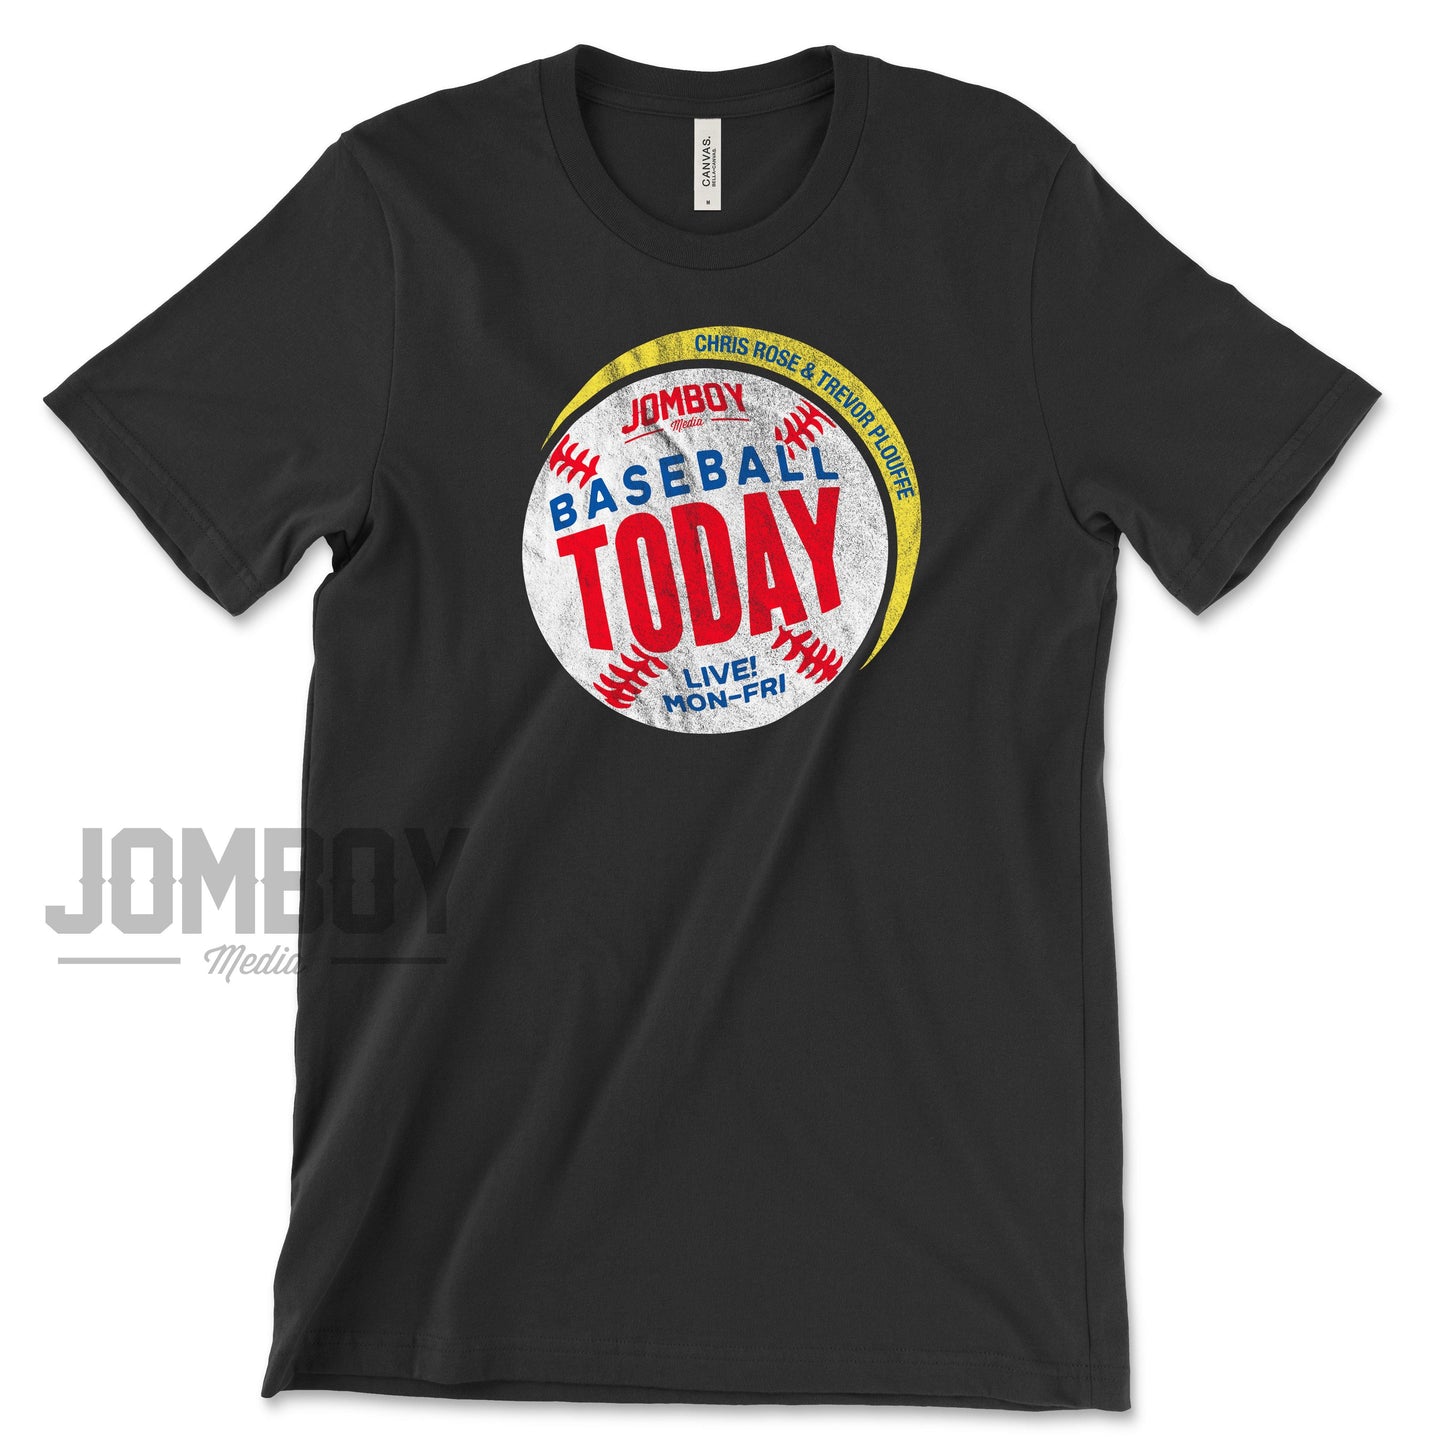 Baseball Today | T-Shirt 2 - Jomboy Media